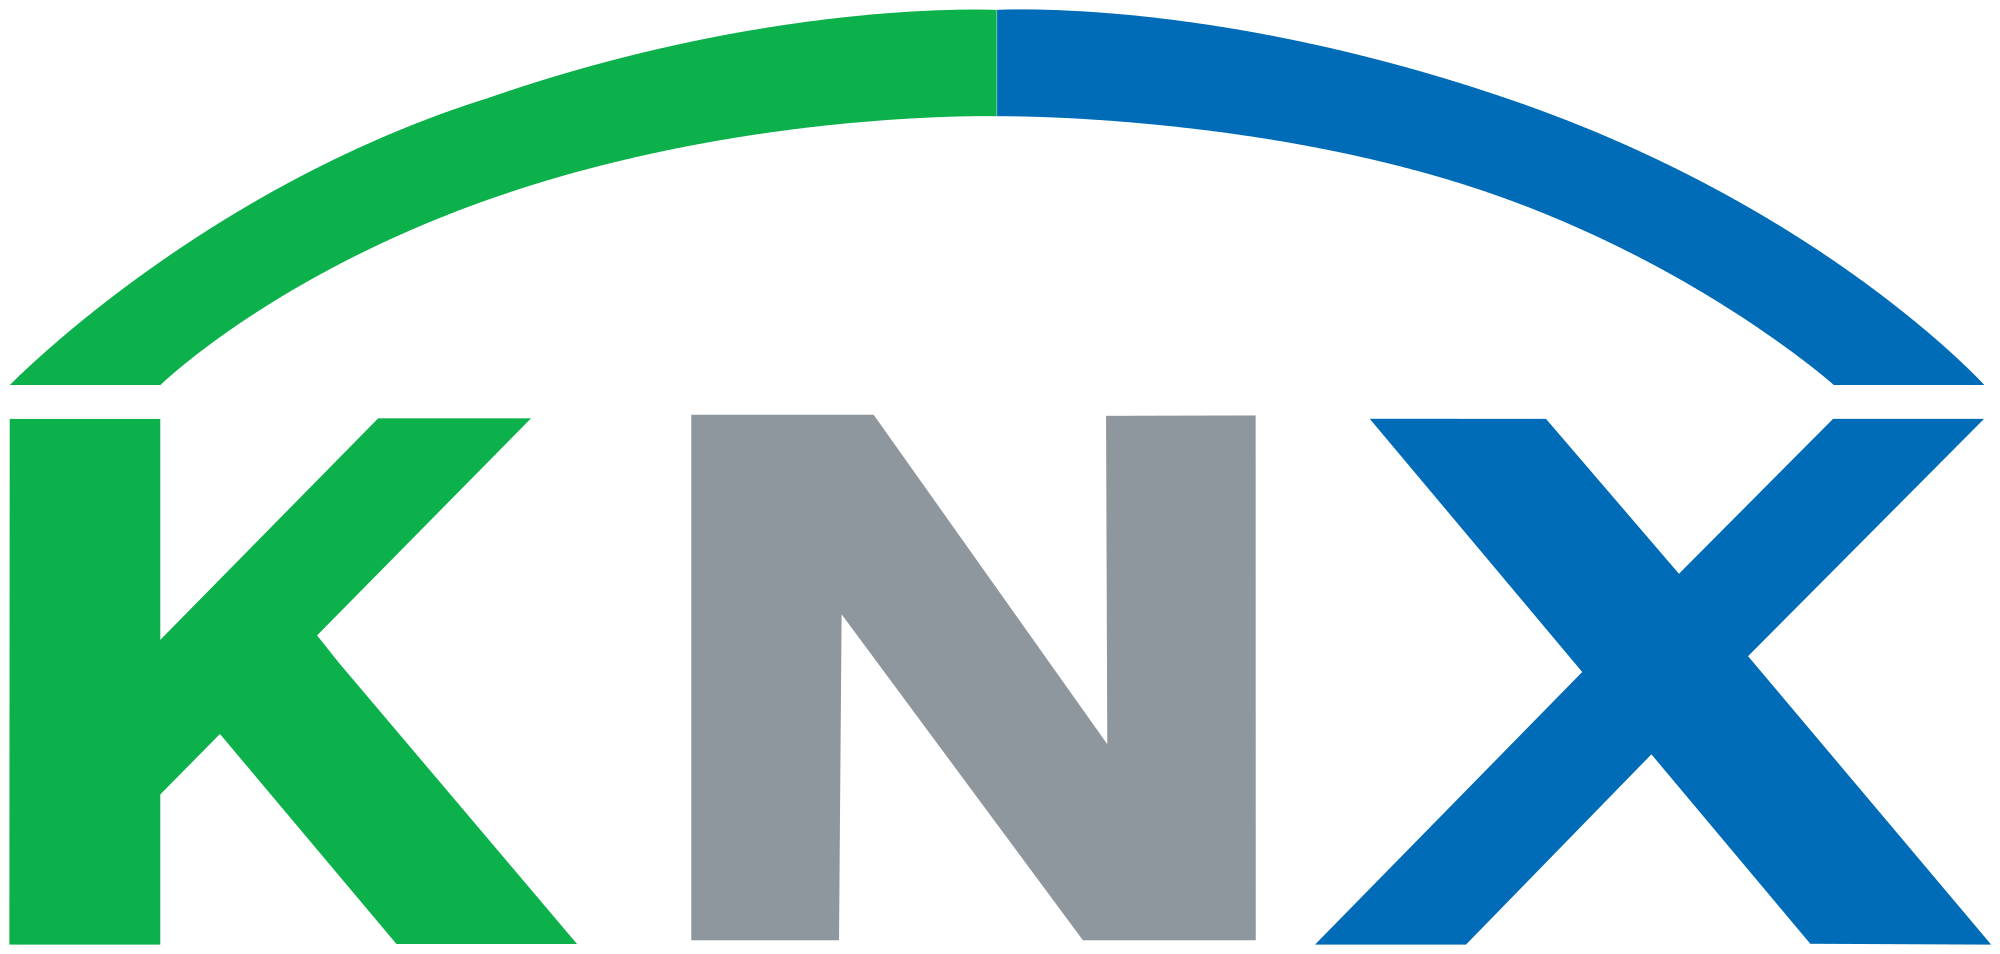 2000px-KNX_logo.svg.png